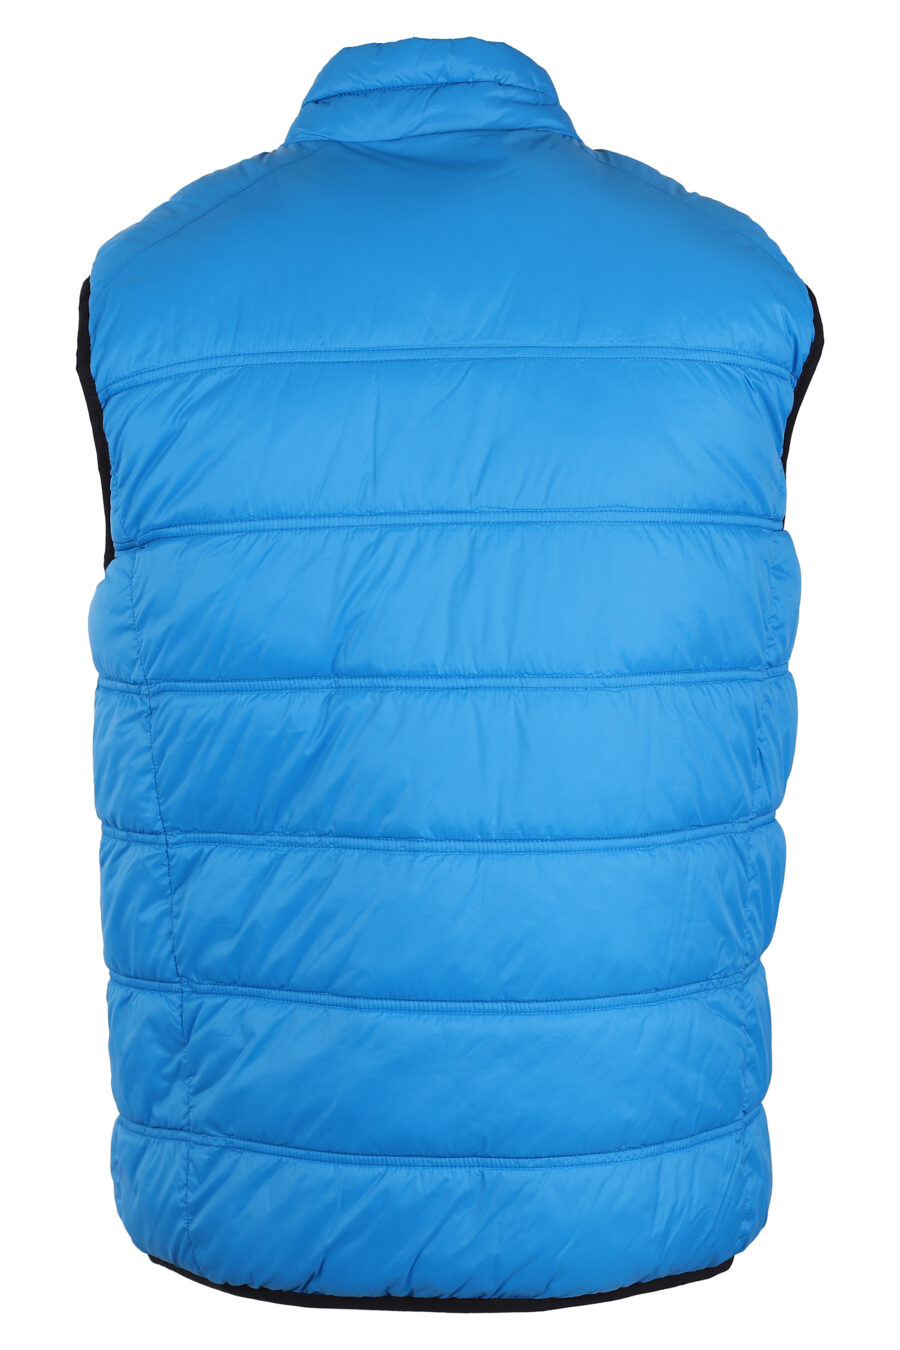 Blue reversible waistcoat with black inside - IMG 4289